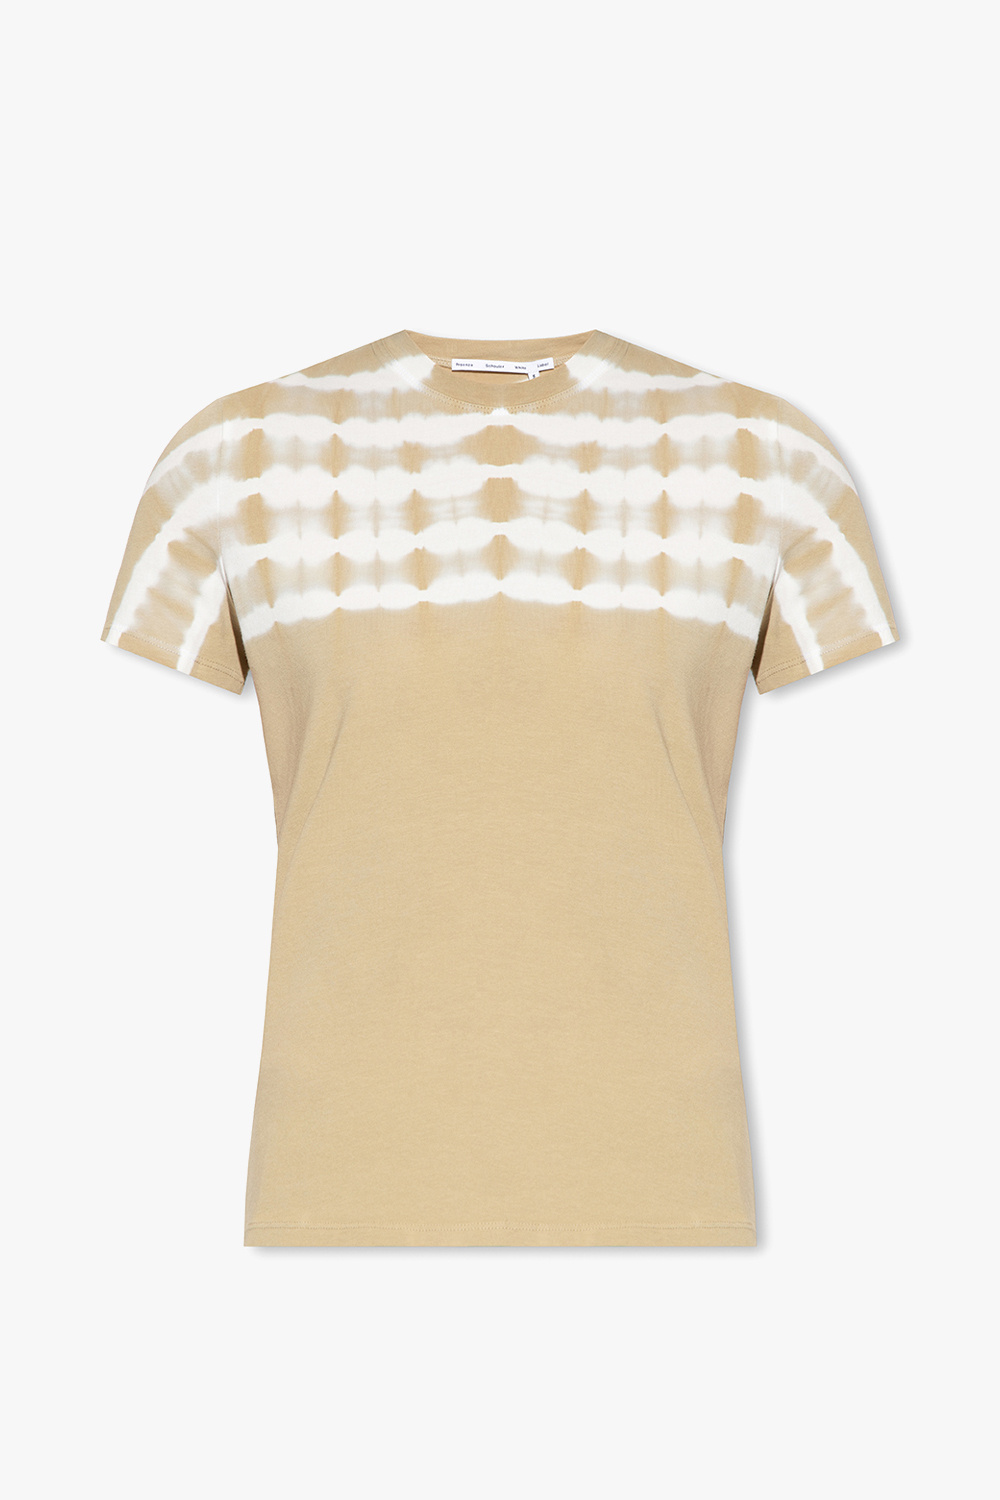 Proenza Schouler White Label Tie-dye T-shirt